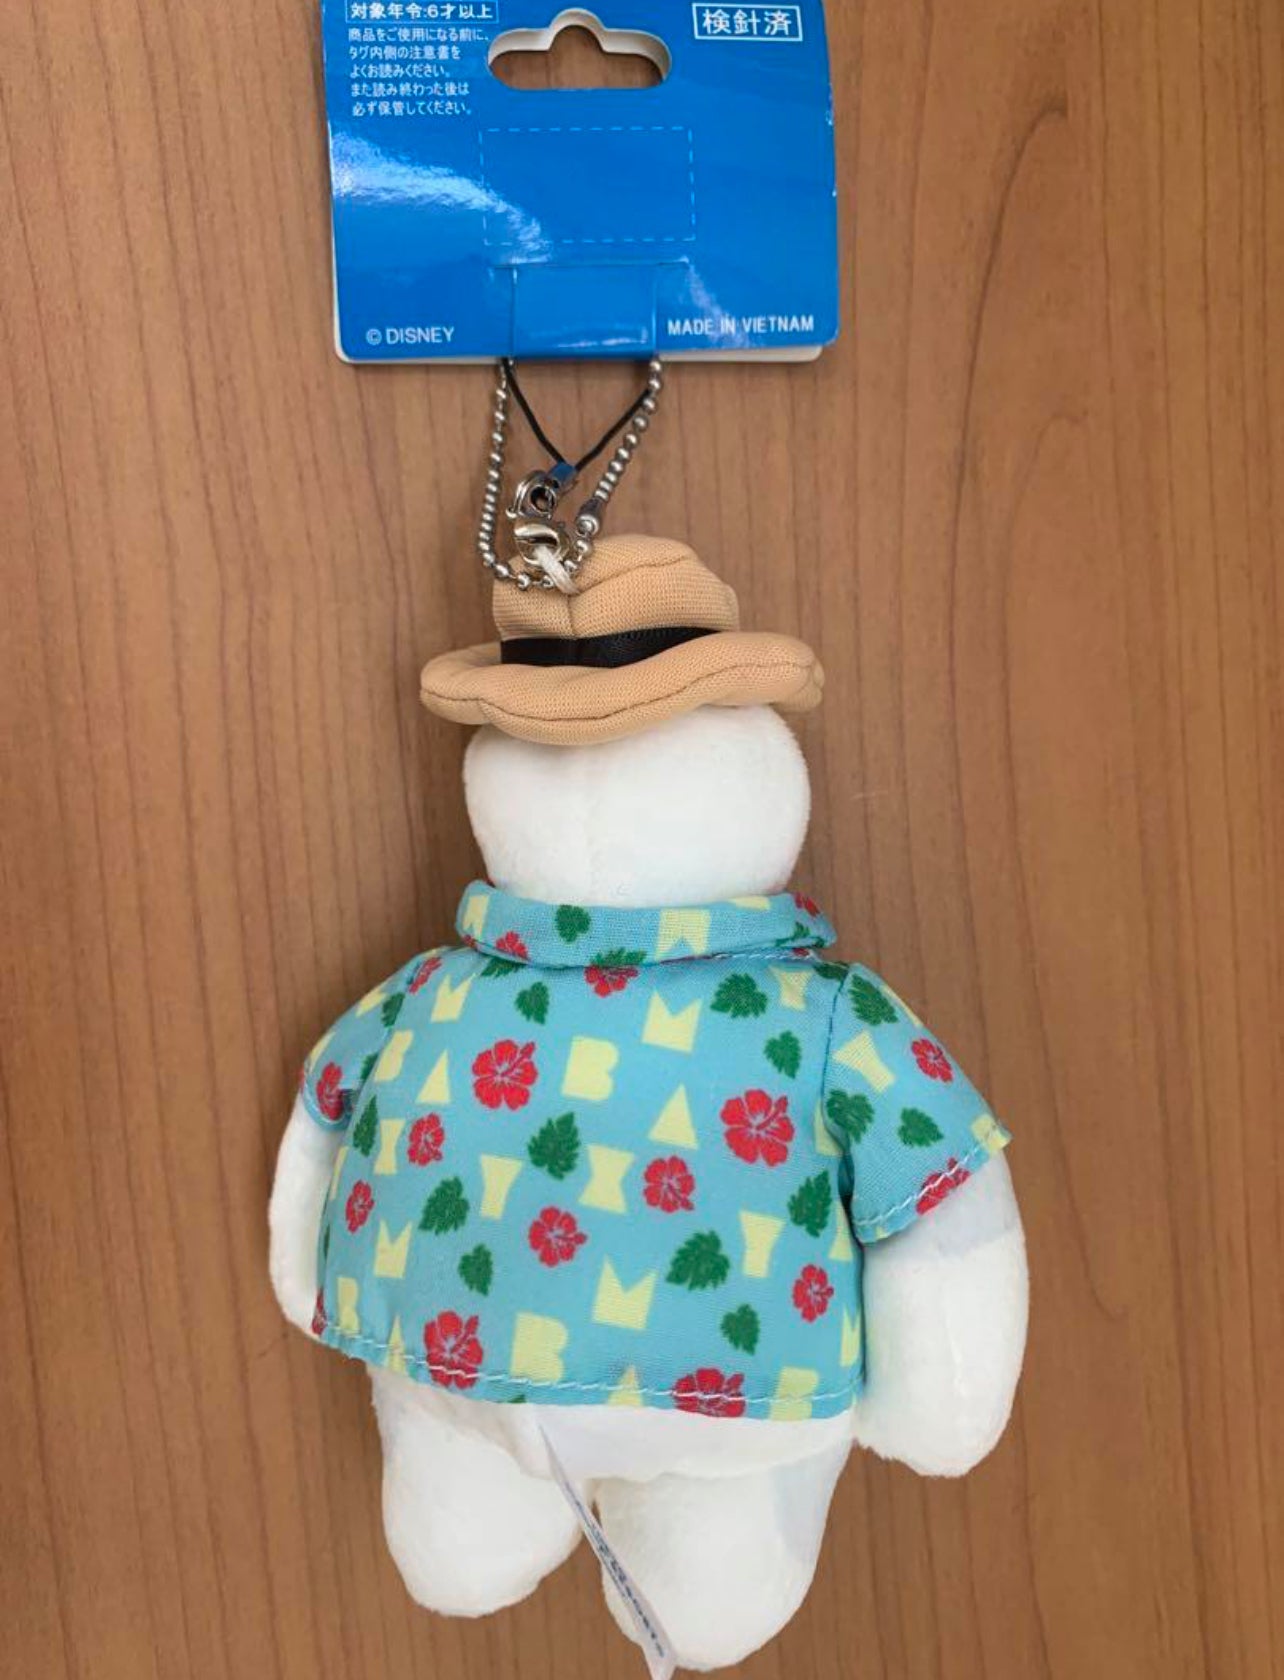 Tokyo Disney vacation Baymax keychain plush